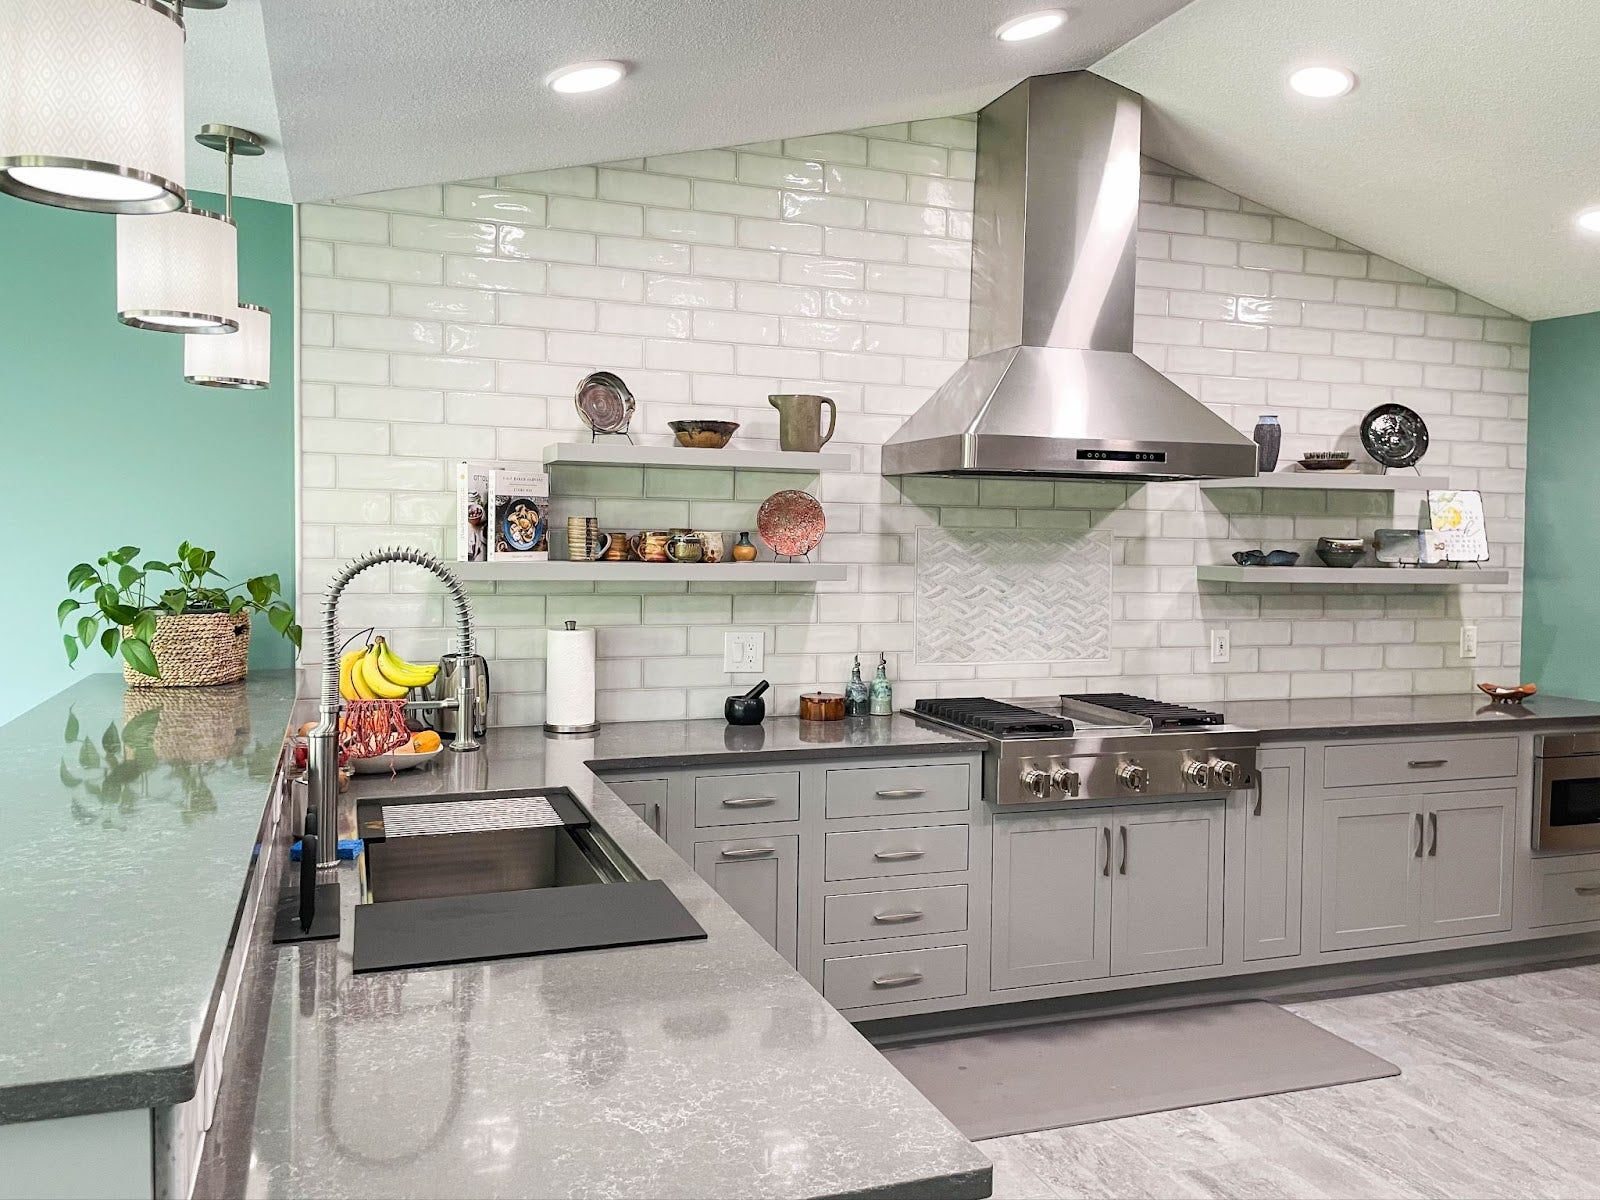 Kitchen with stainless steel appliances and open shelving. - Proline Range Hoods - prolinerangehoods.com 